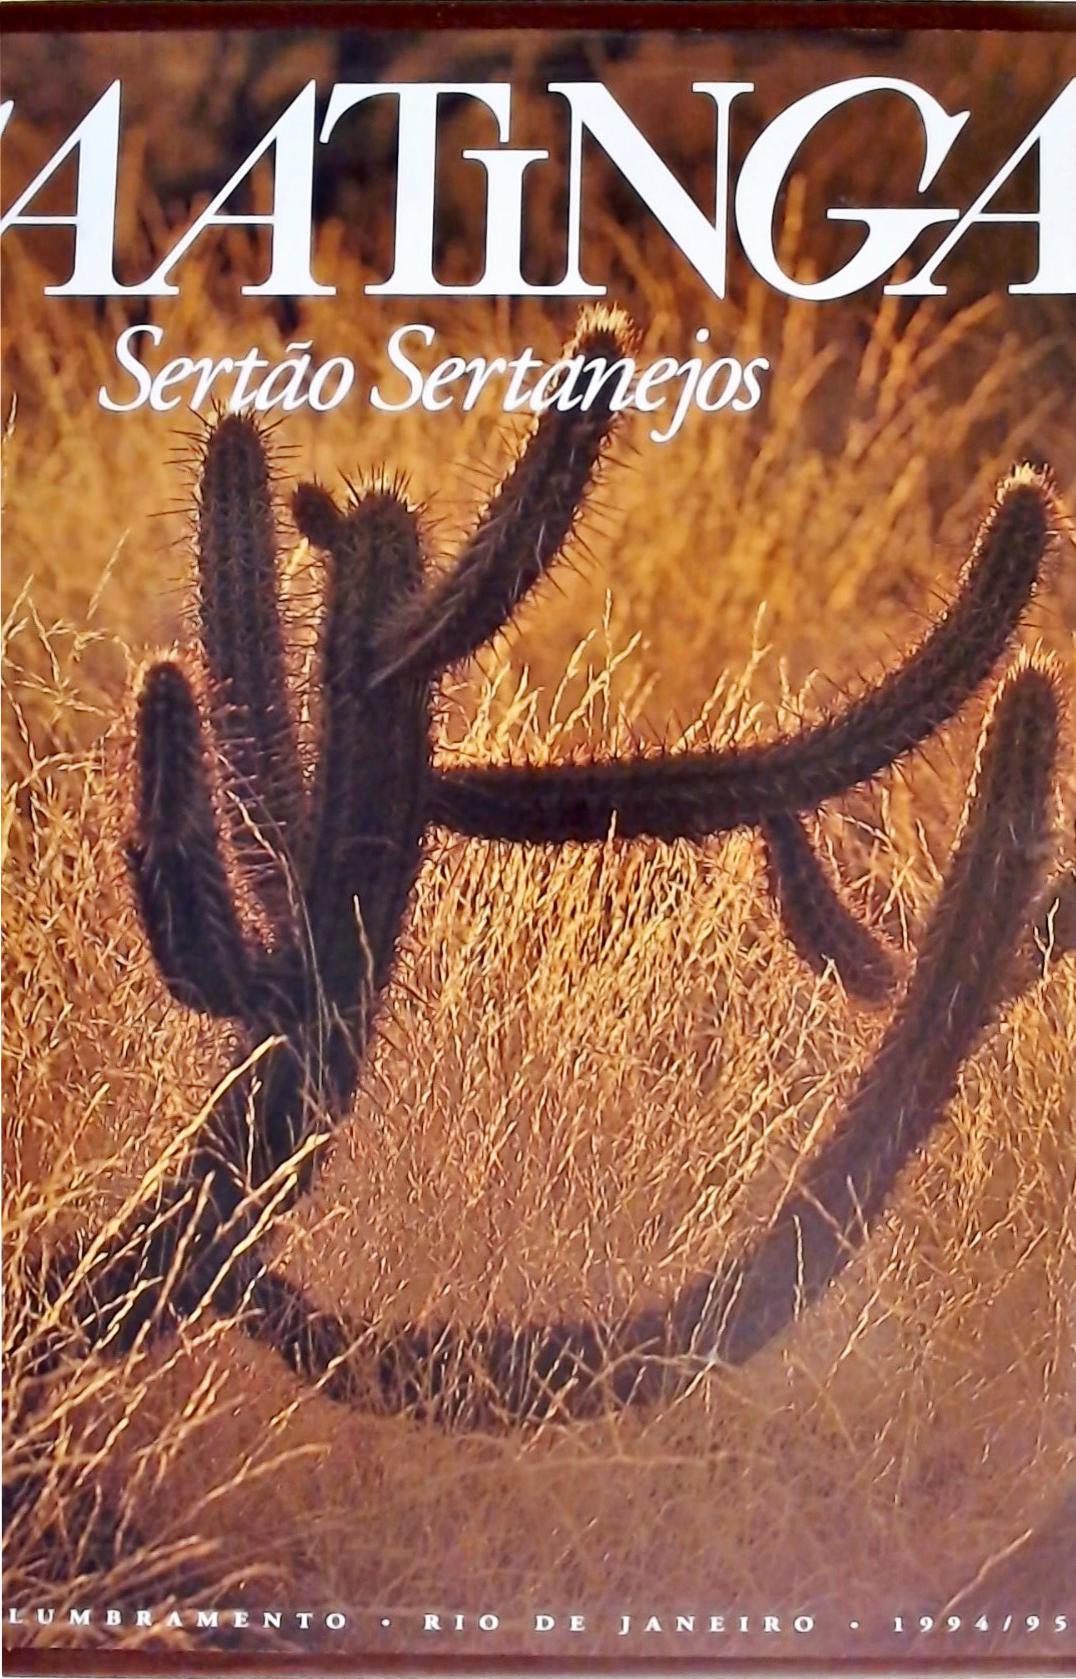 Caatinga Sertão Sertanejos